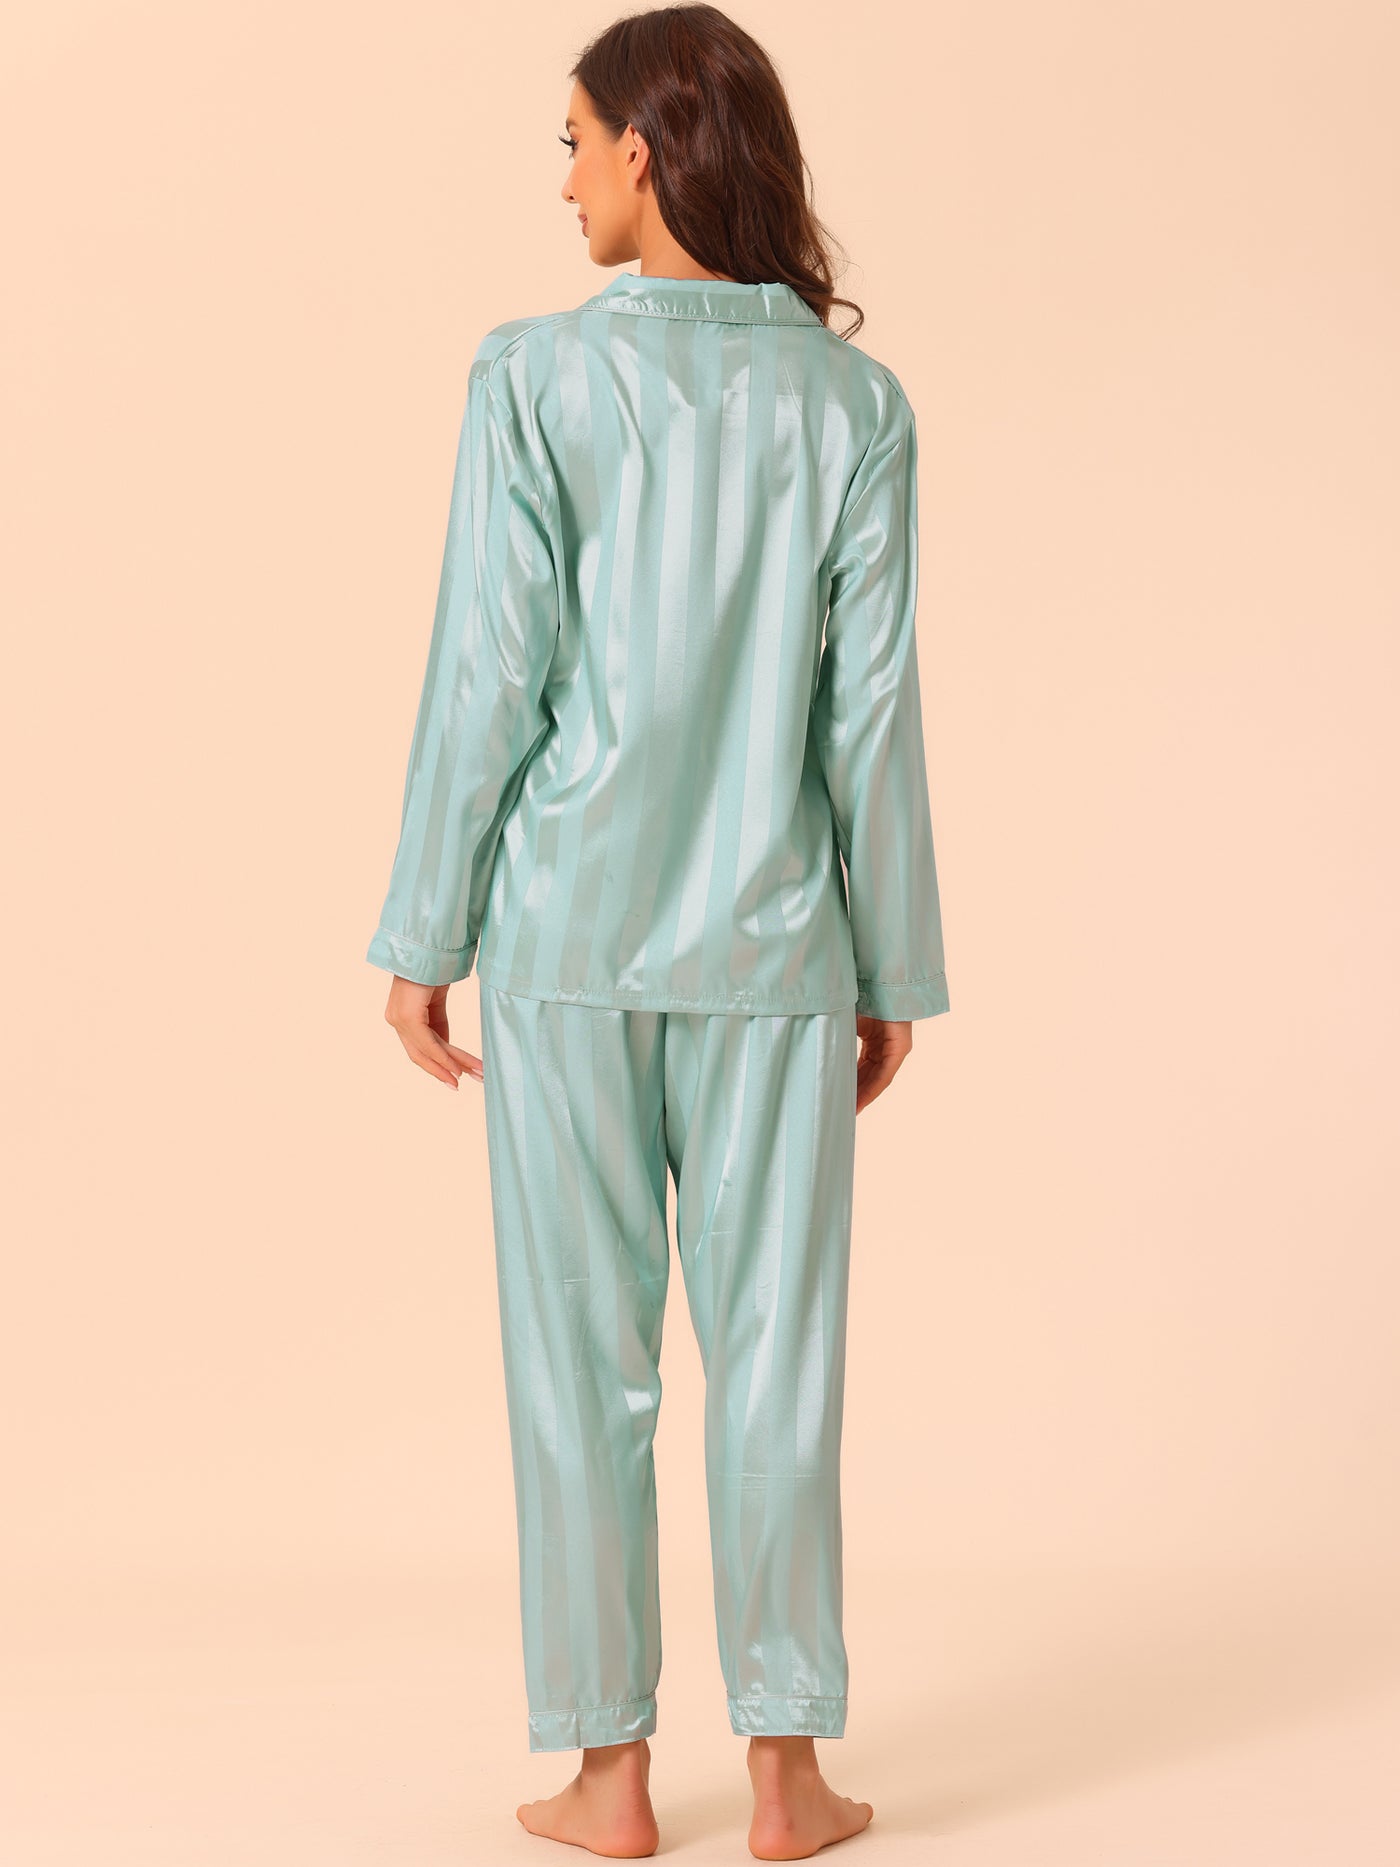 Bublédon Womens Satin Sleepwear Soft Button Down Nightwear with Pants Pajama Set